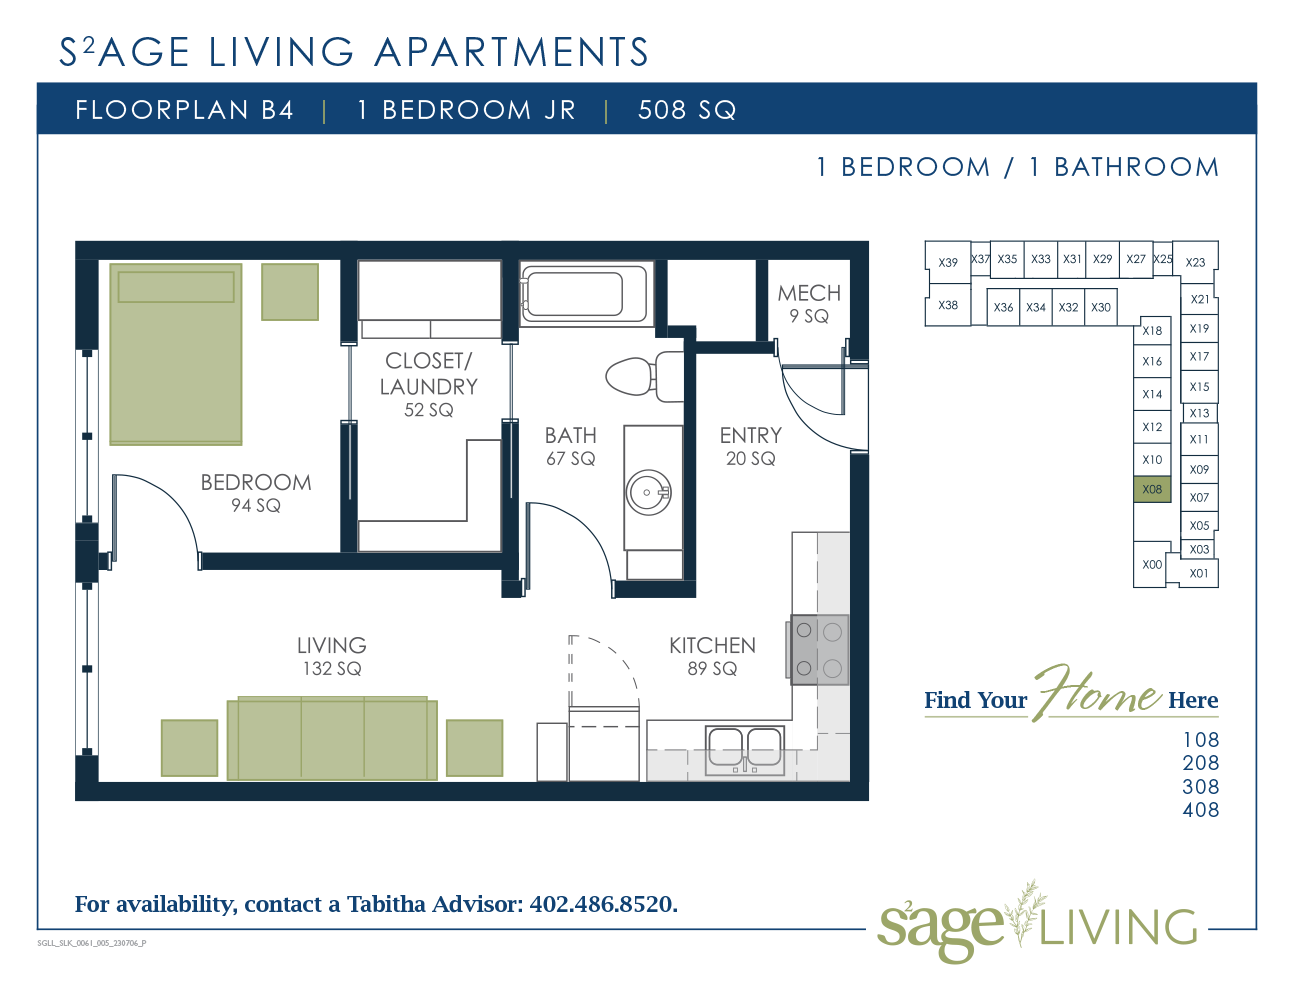 S2age Living Floor Plan, Apartment B4